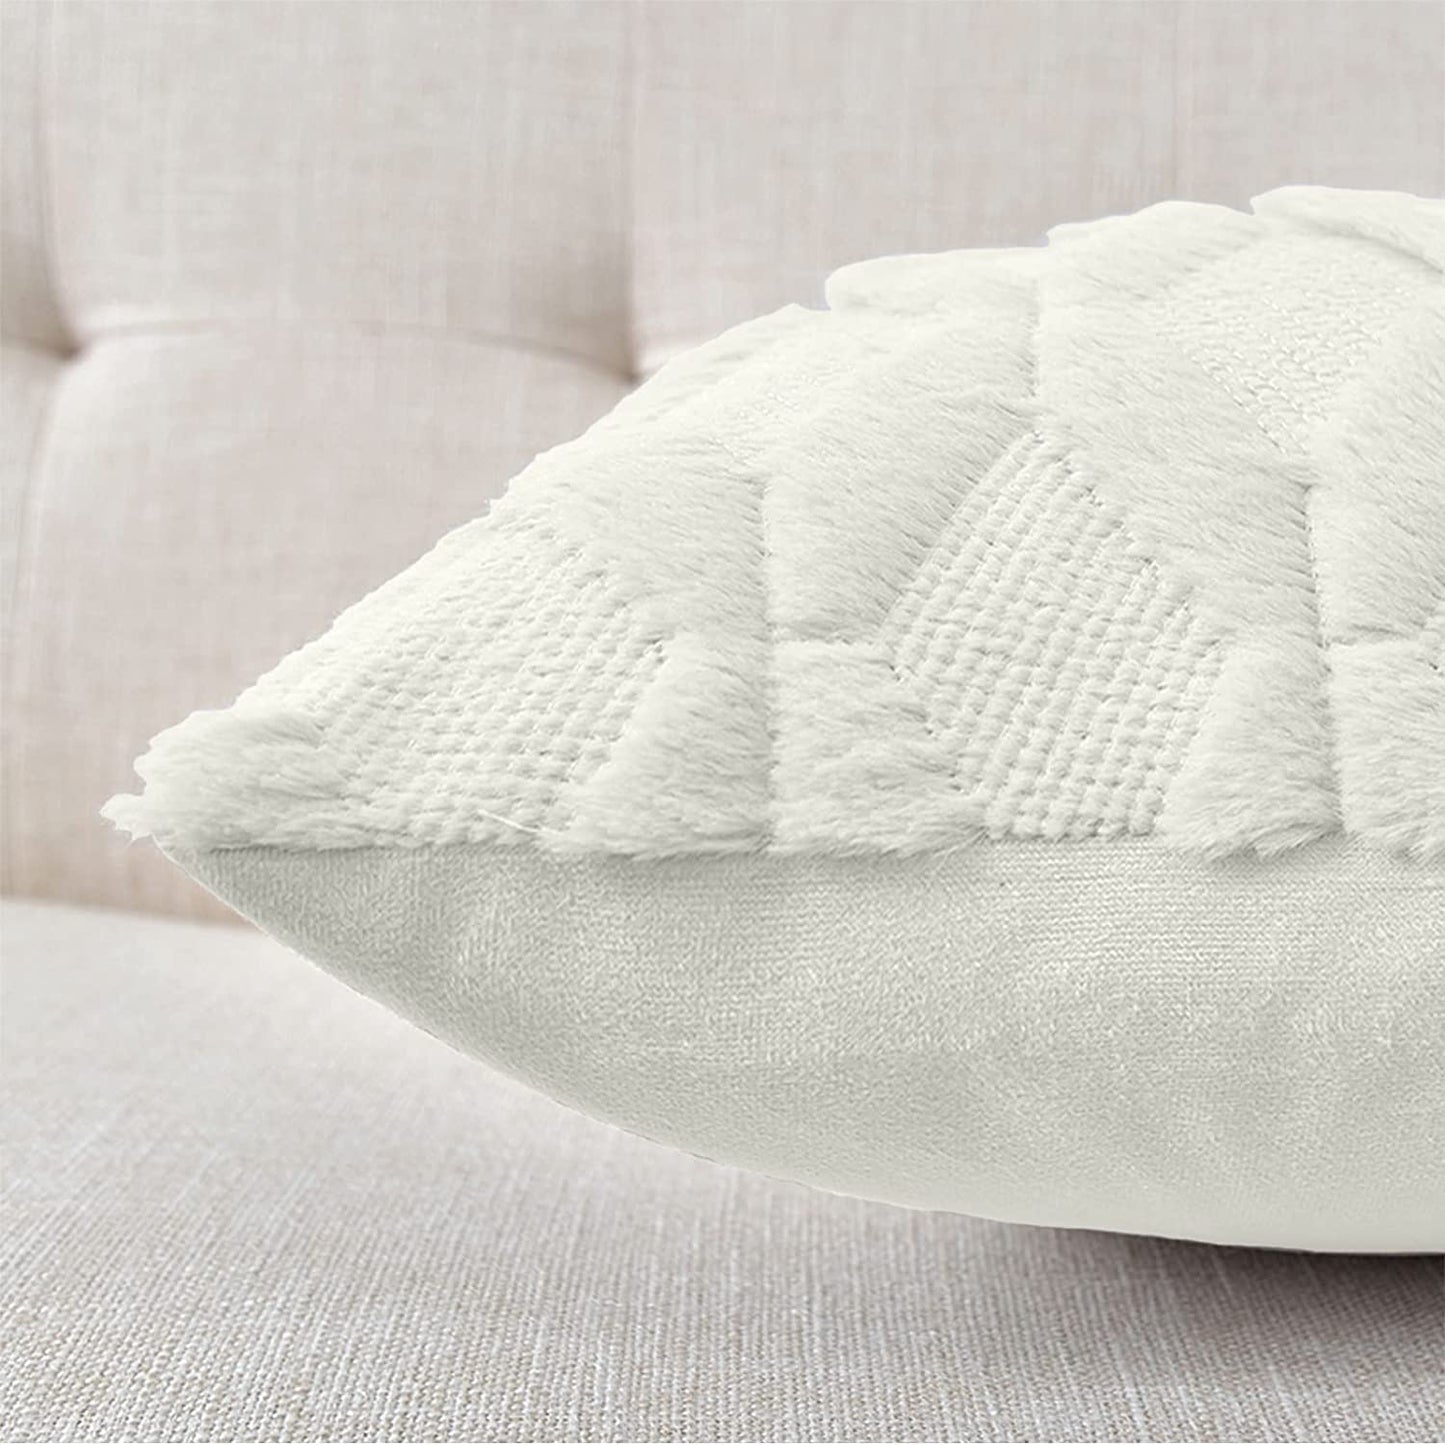 Decorative Boho Throw Pillow Covers 45 x 45 cm - 2 pack White